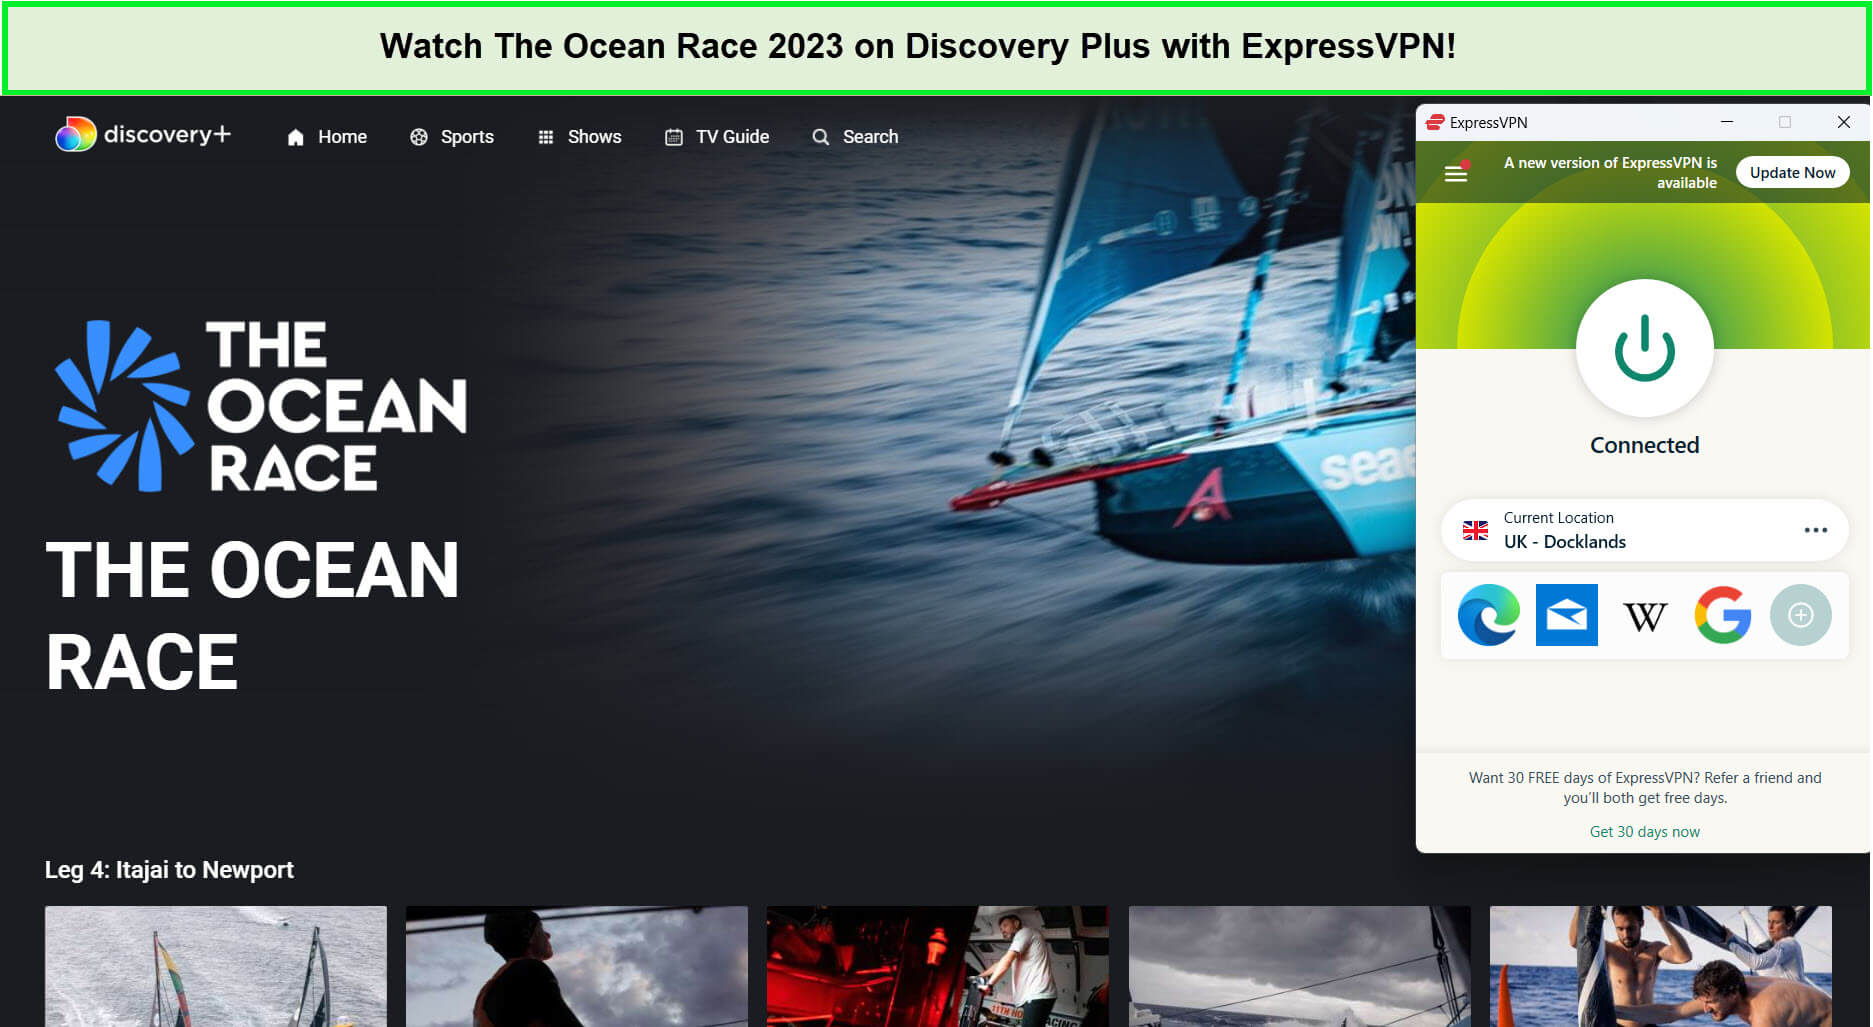 expressvpn-unblocks-the-ocean-race-2023-live-in-Australia-on-discovery-plus